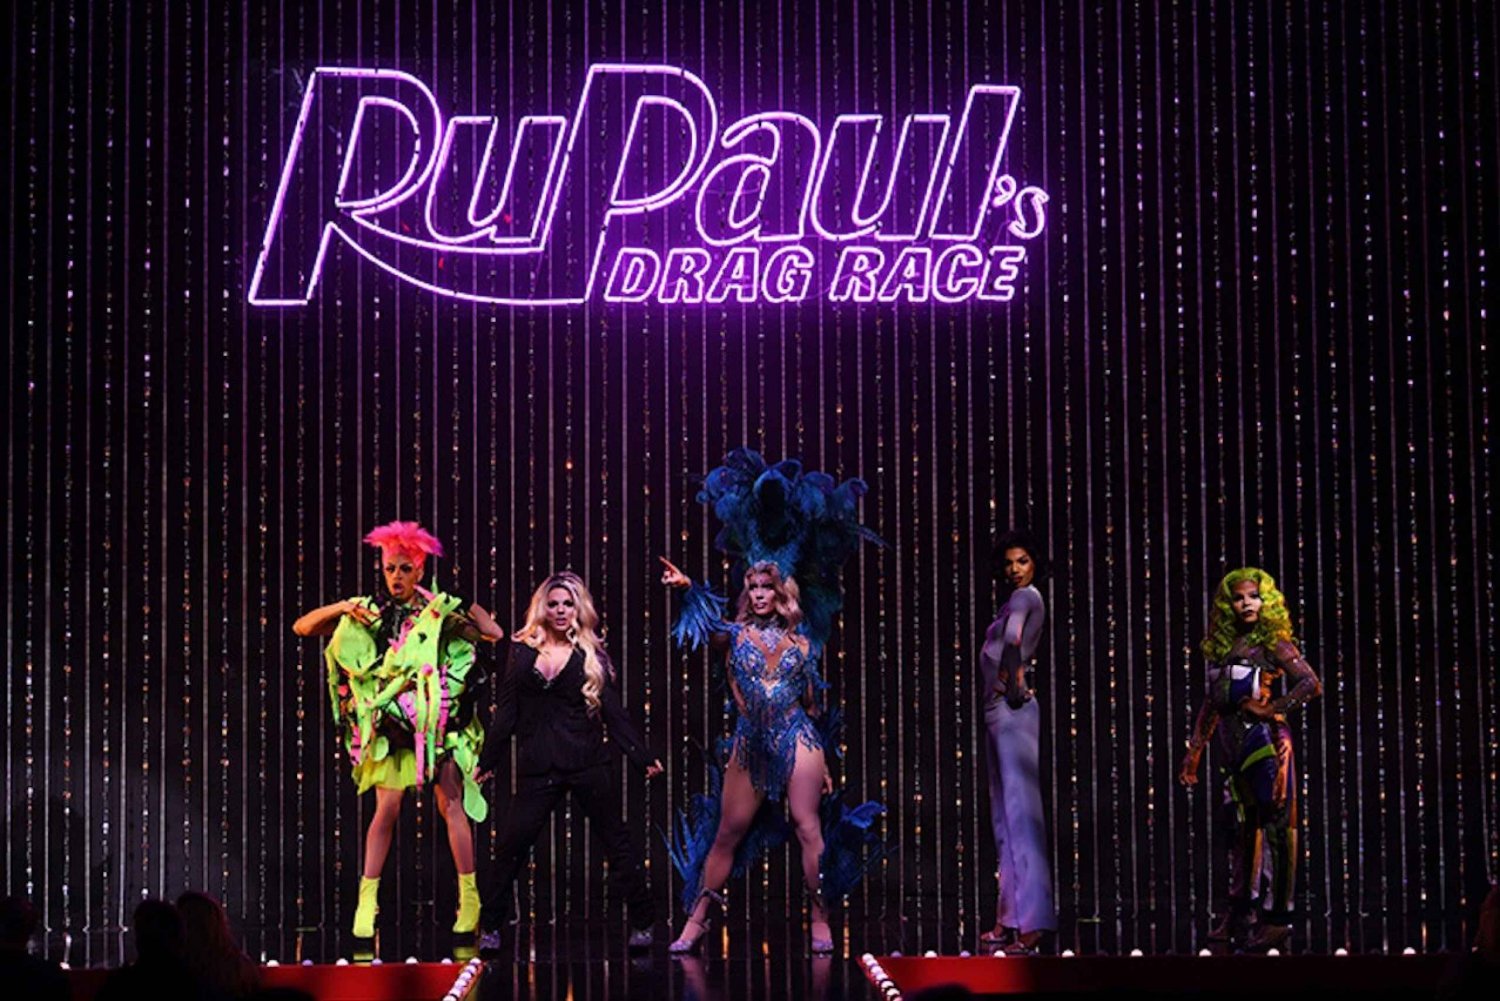 Las Vegasissa: Flamingossa: RuPaul's Drag Race LIVE! at the Flamingo!